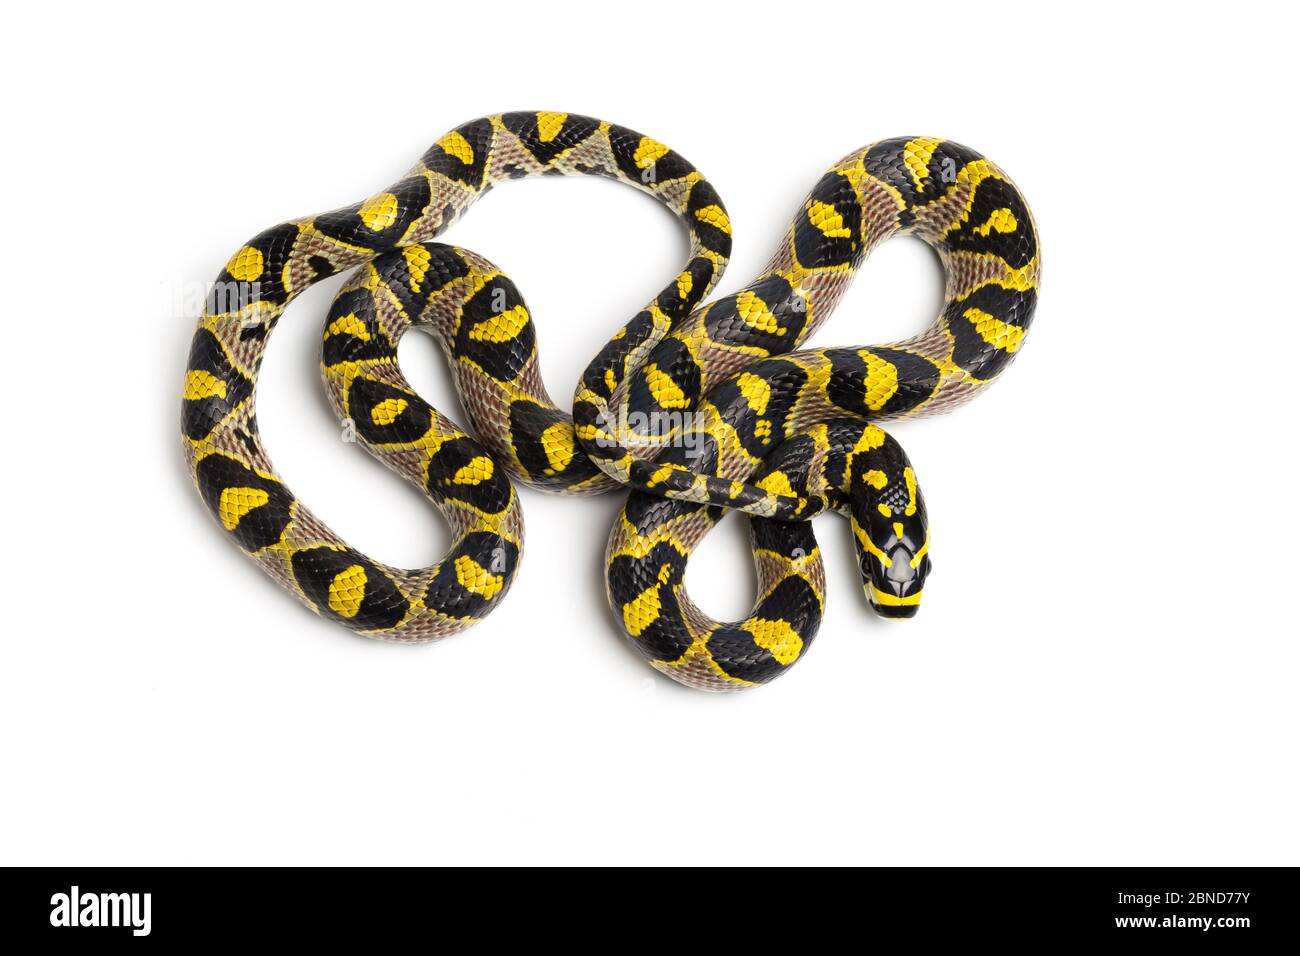 Mandarin rat snake (Euprepiophis mandarinus) on white background. Captive, native to China and parts of SE Asia. Stock Photo